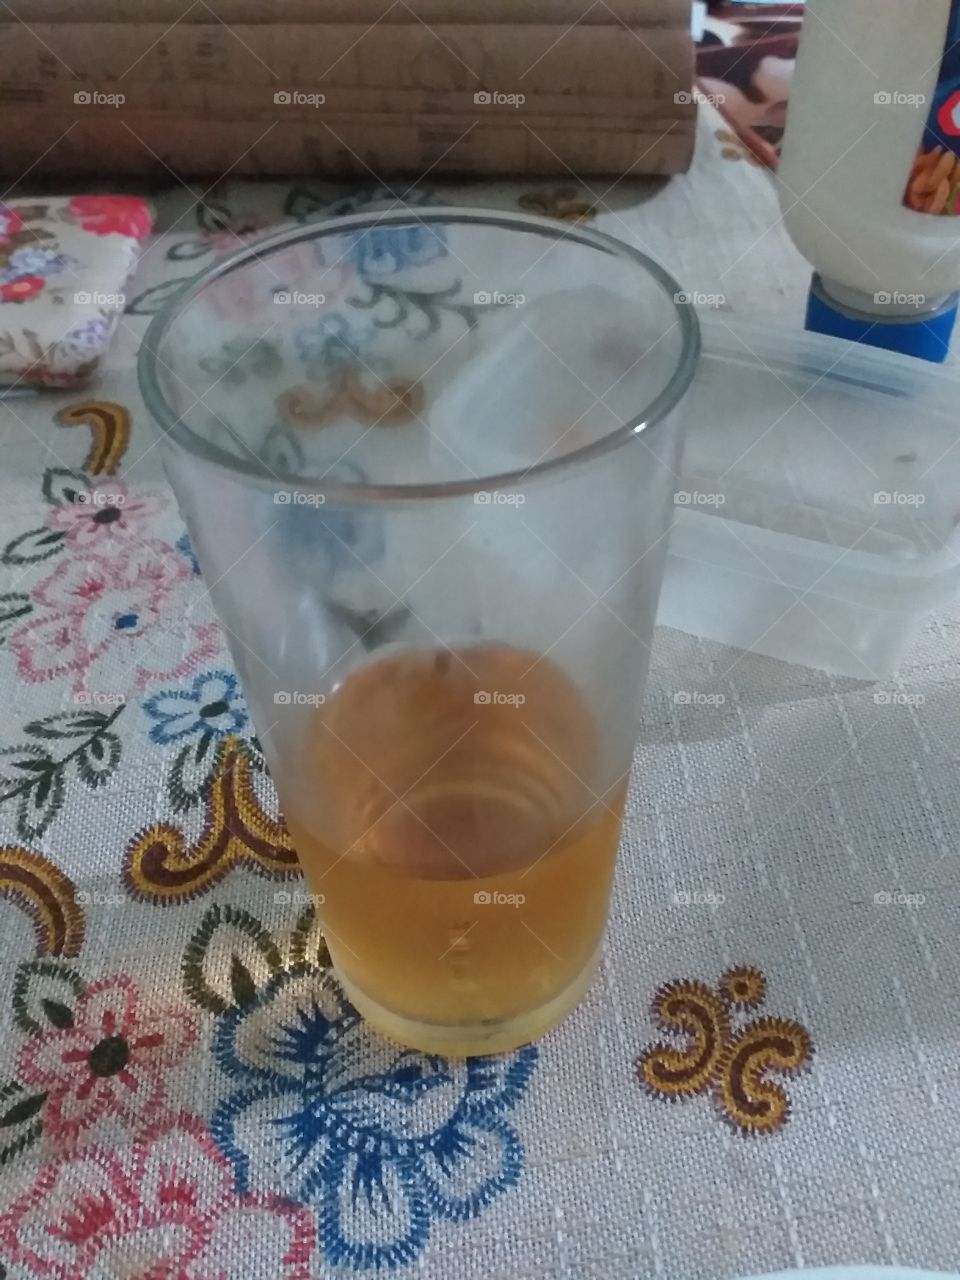 copo de suco de uva /glass of grape juice